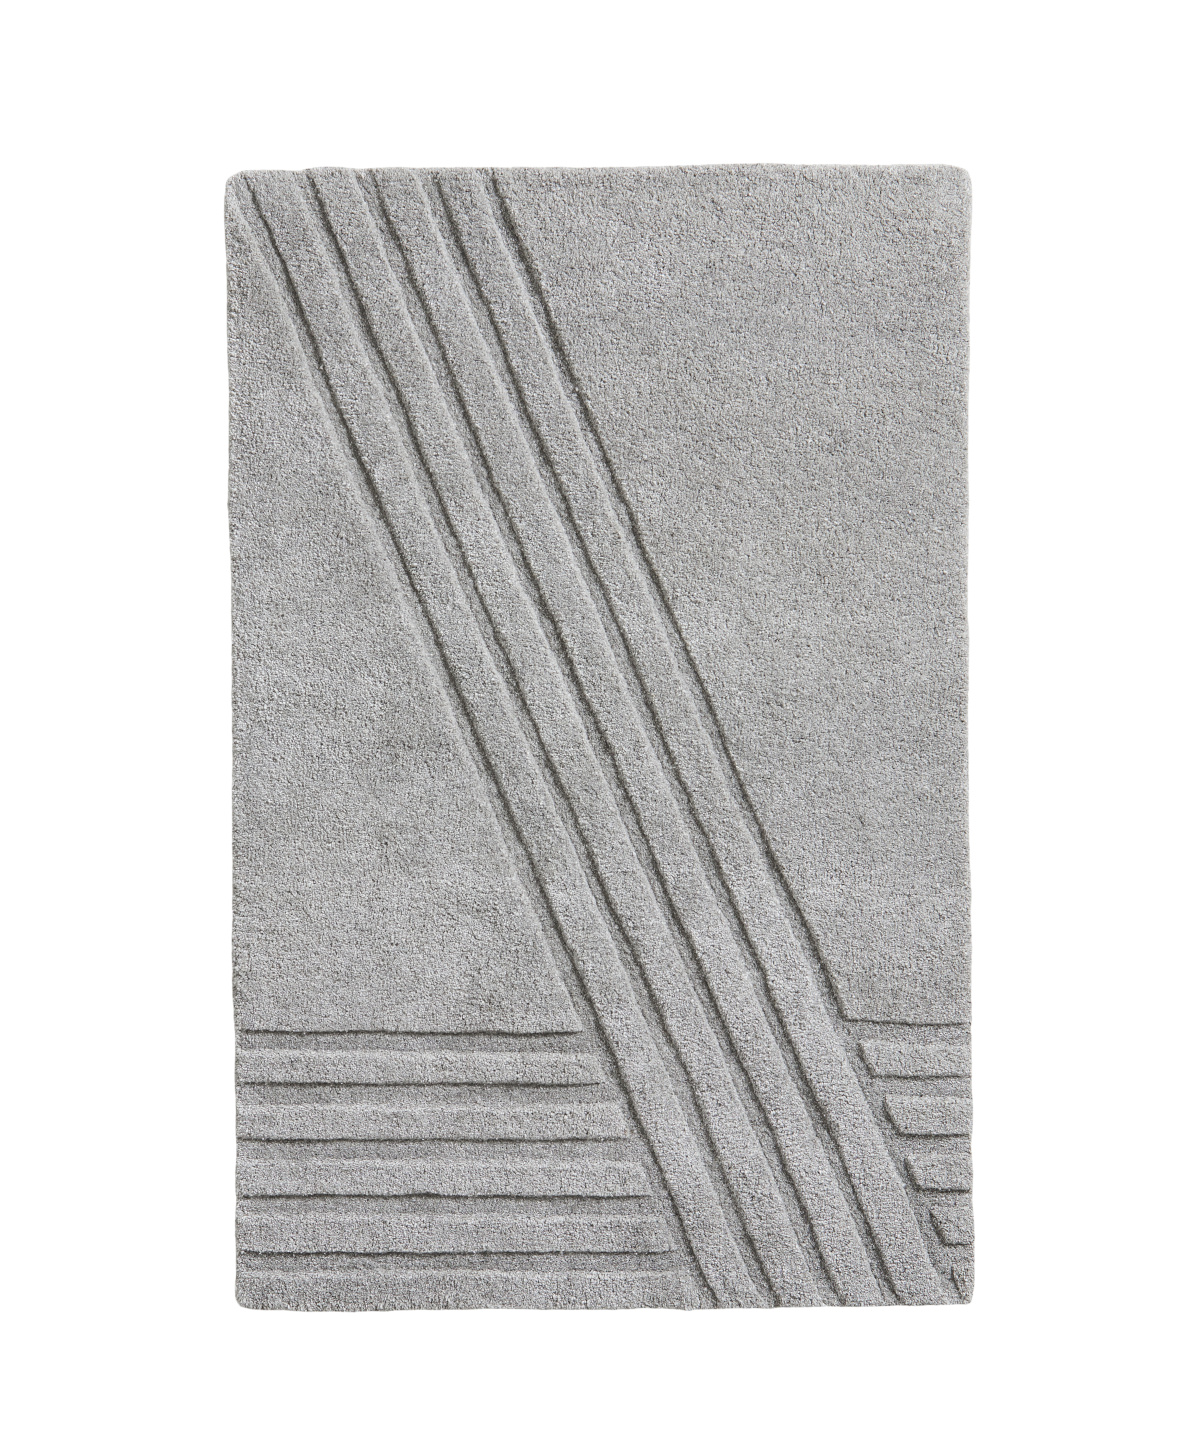 Kyoto Teppich, 210 x 340 cm, grey